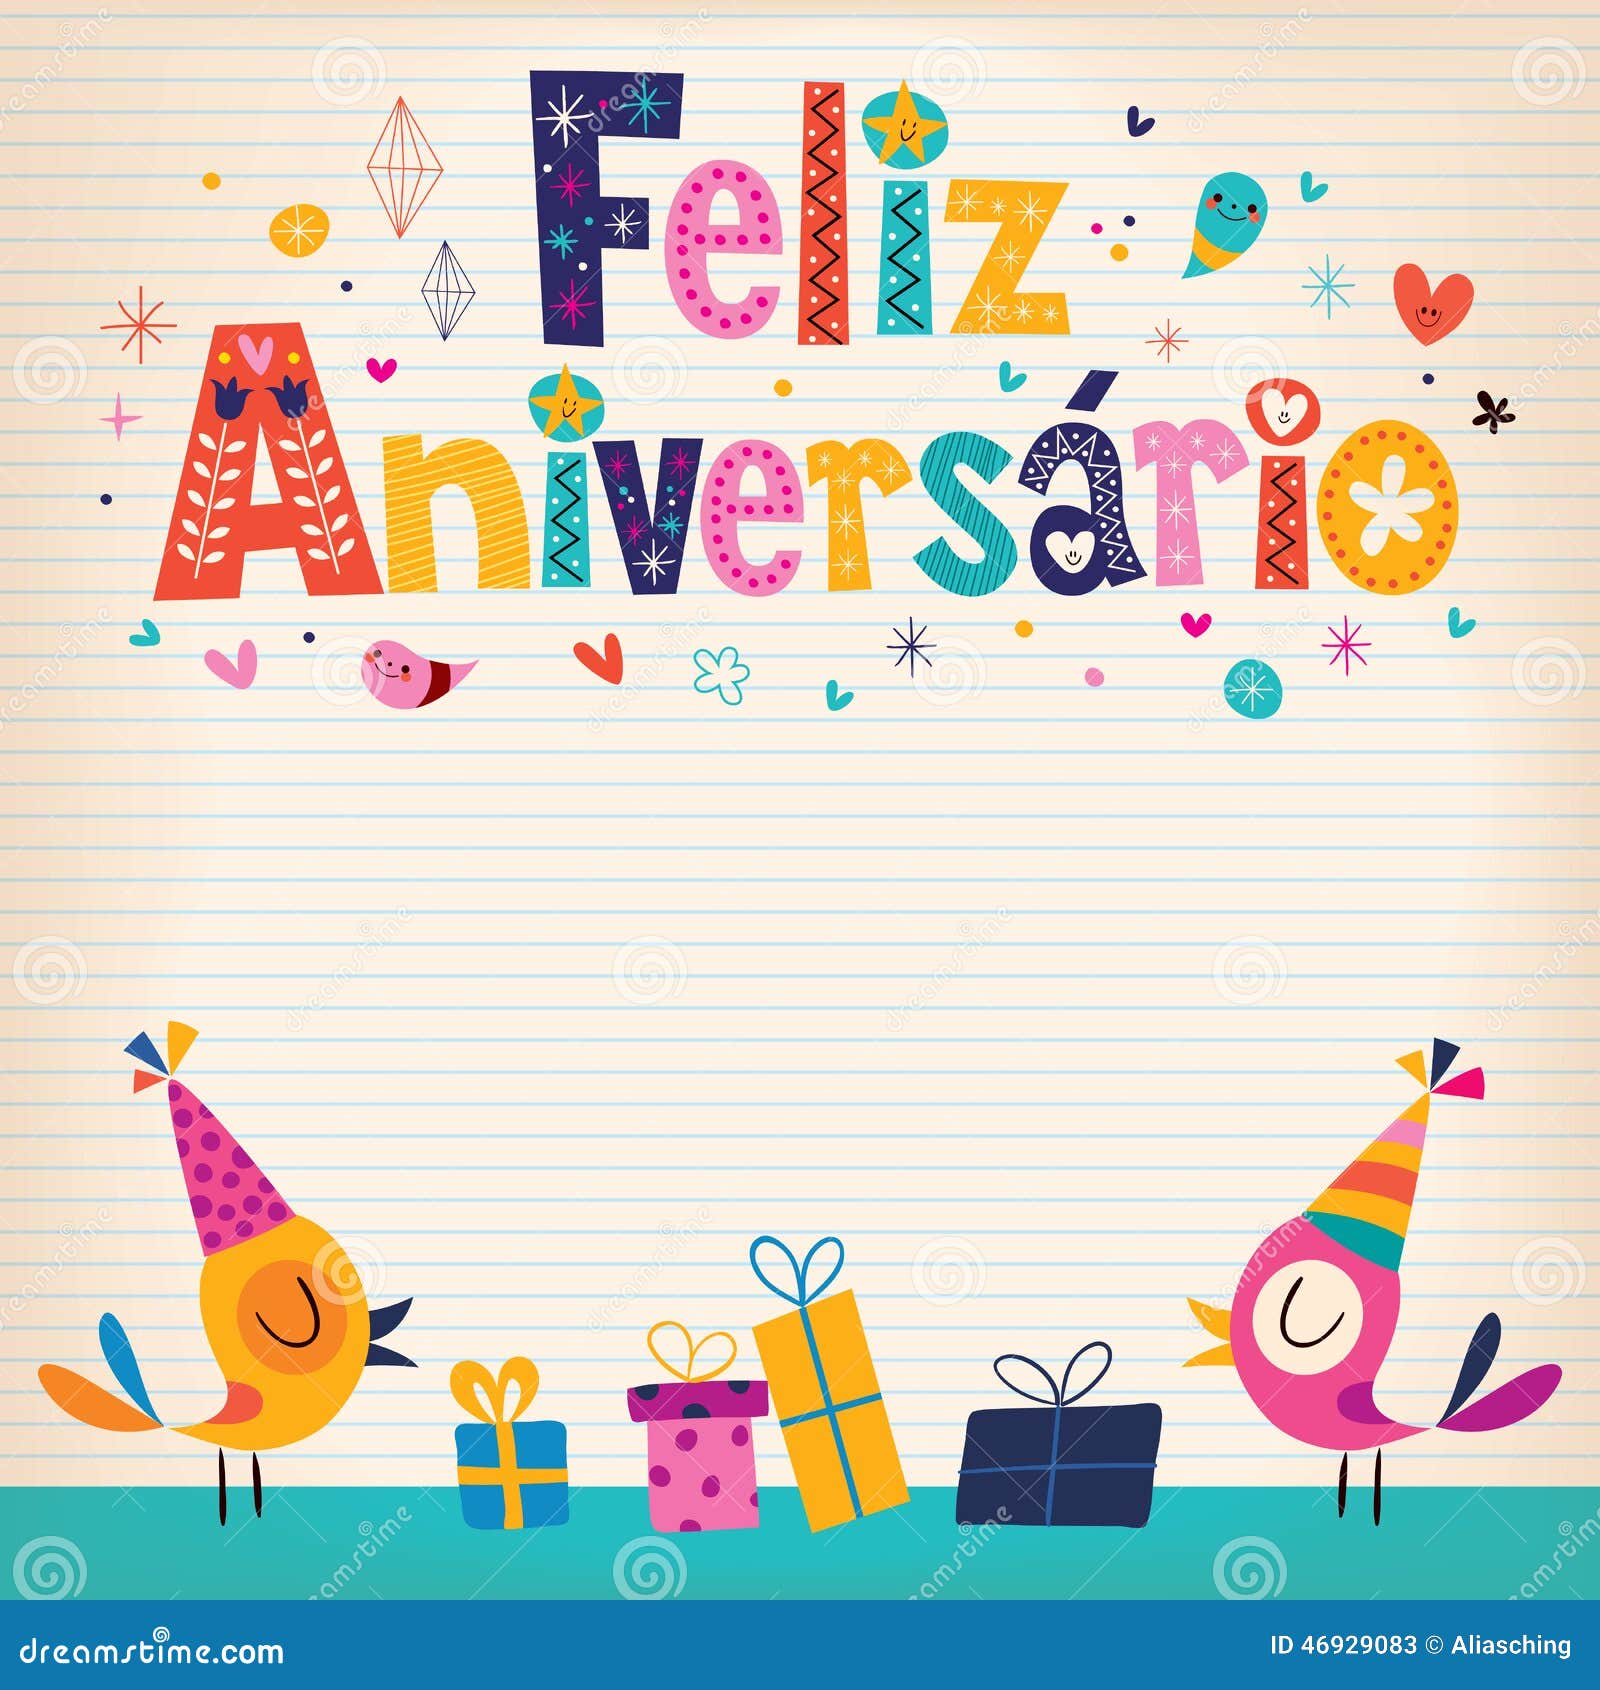 feliz aniversario portuguese happy birthday card retro style decorative lettering cute birds 46929083